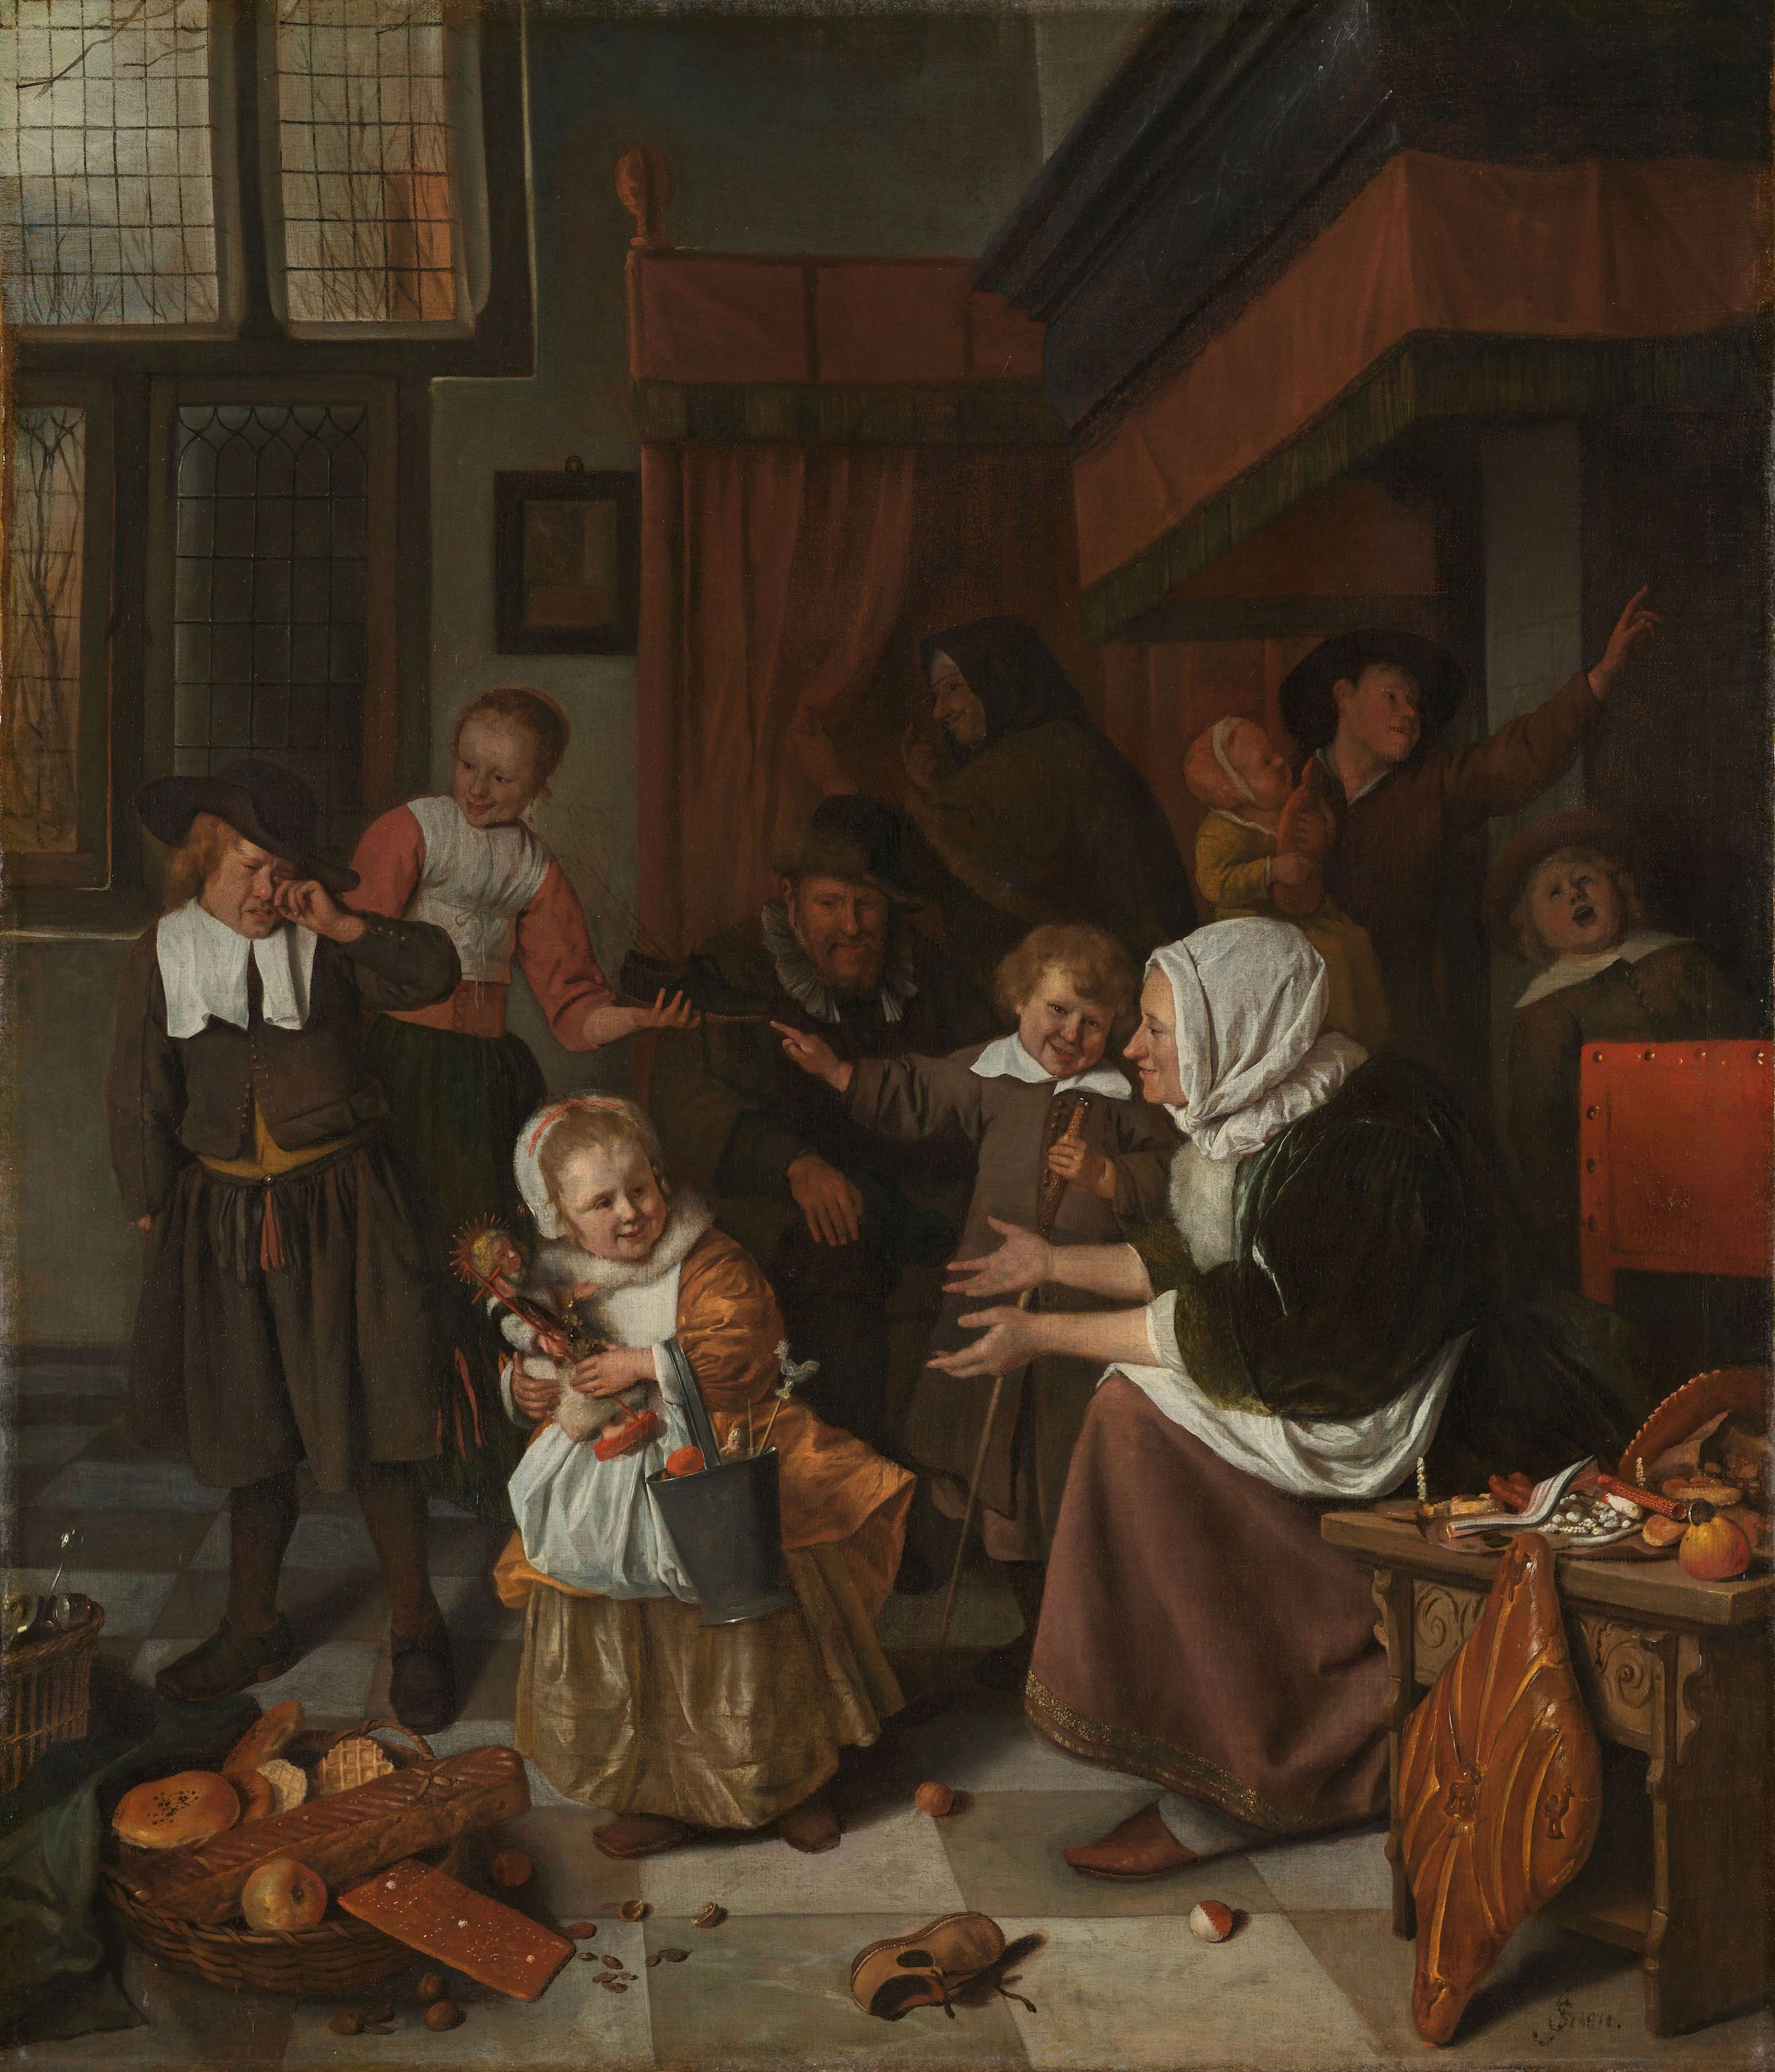 The Feast of Saint Nicholas, 1665-1669, oil on canvas